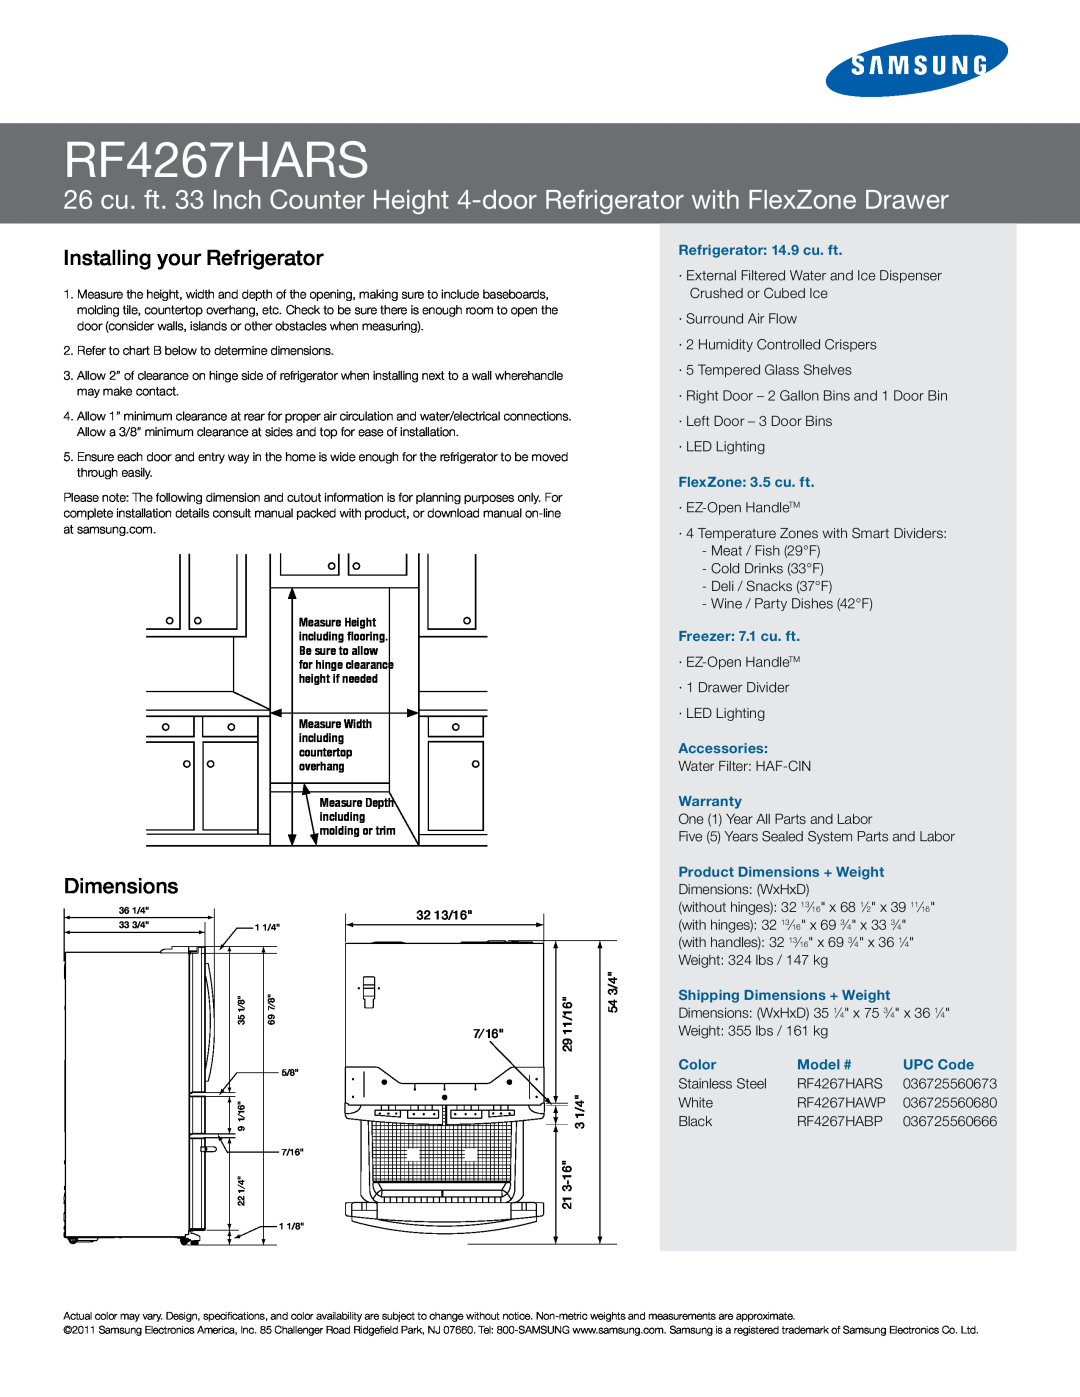 Samsung RF4267HARS manual Installing your Refrigerator, Dimensions 